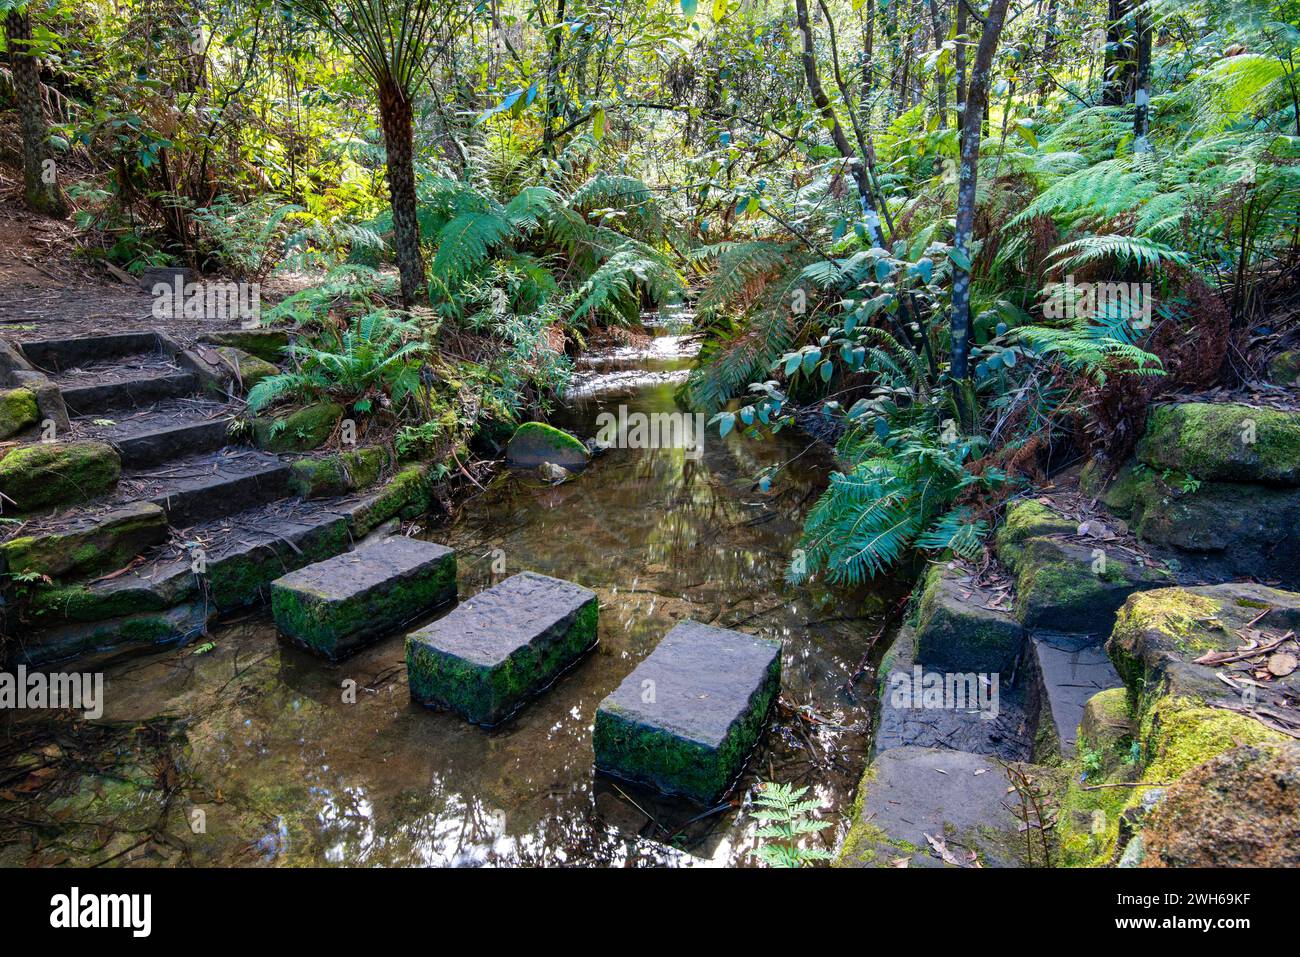 Large cut stone blocks at a creek crossing along the lush green Five Waterfall Walk at Lawson, New South Wales, Australia Stock Photo